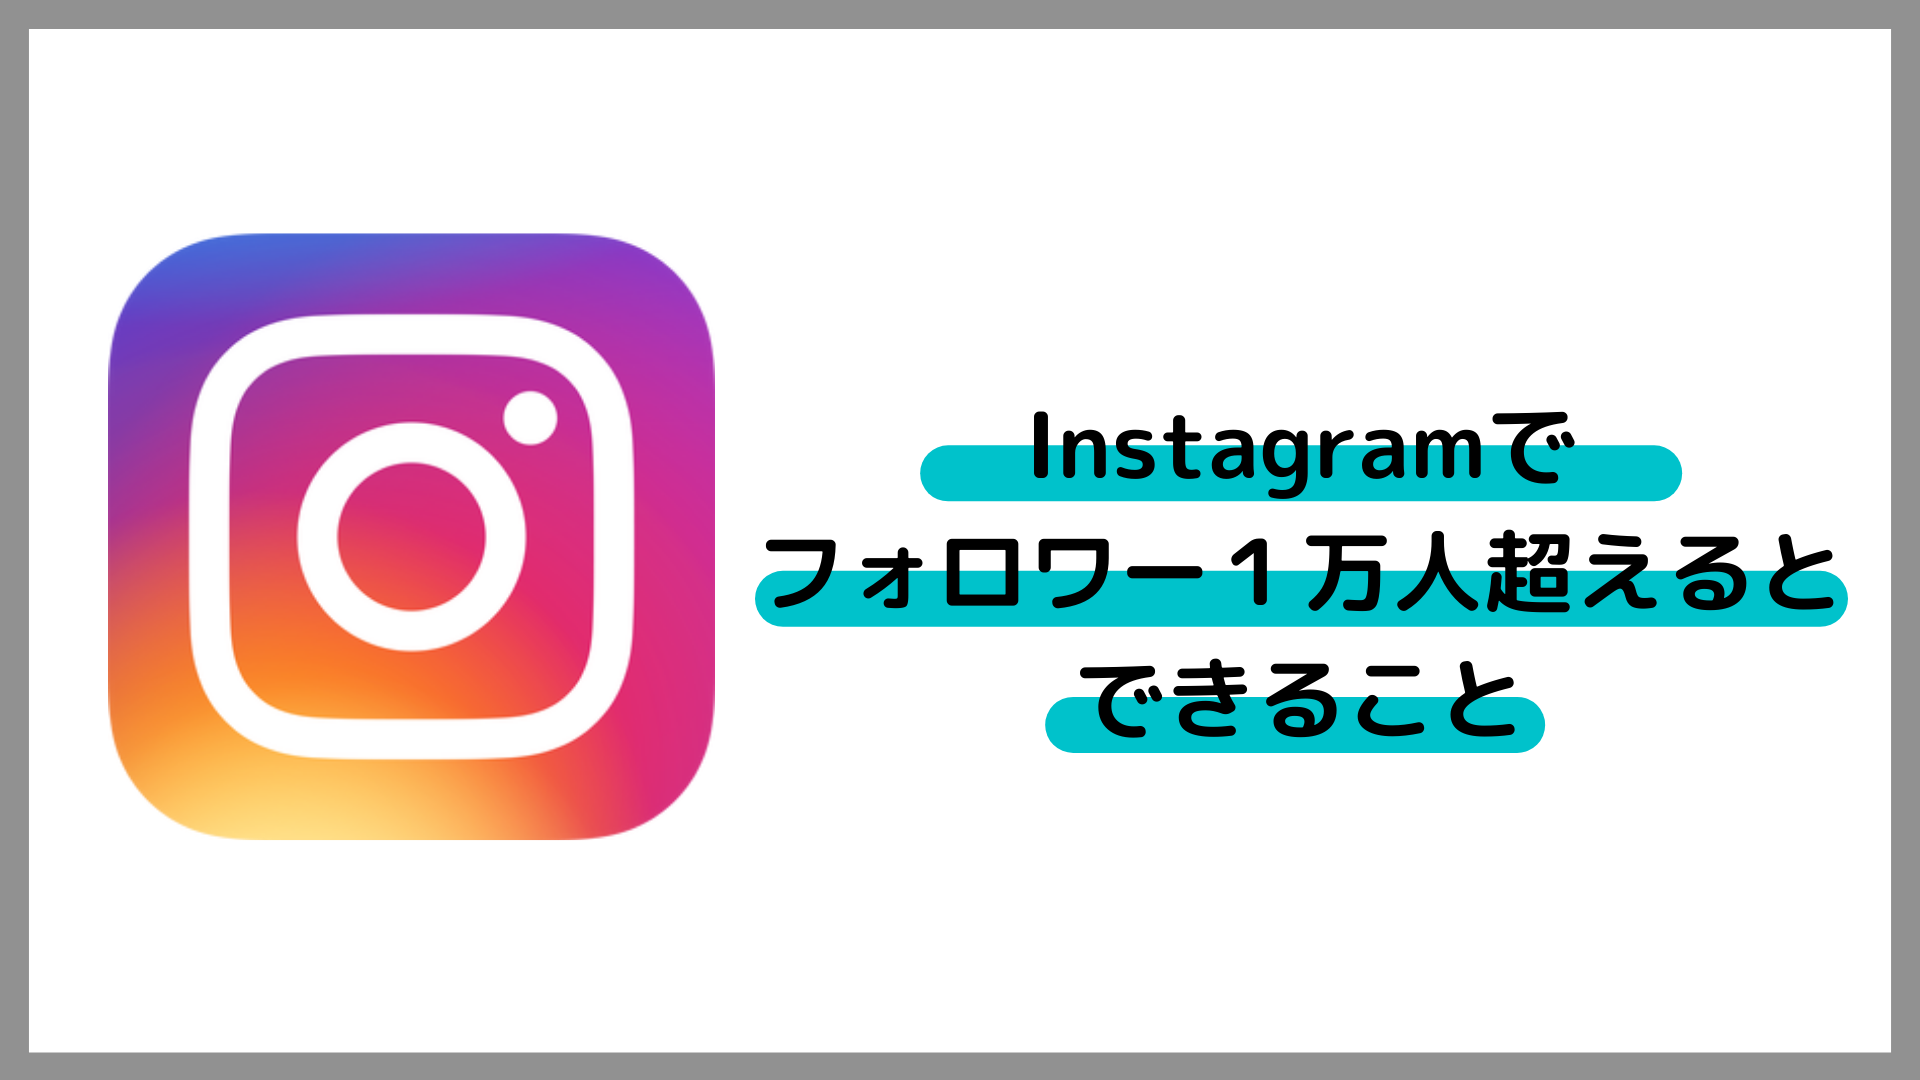 Instagramでフォロワー1万人以上で解放される機能 ストーリーズのリンク機能とigtvの上限時間延長 熊本の広告代理店 株式会社河内研究所